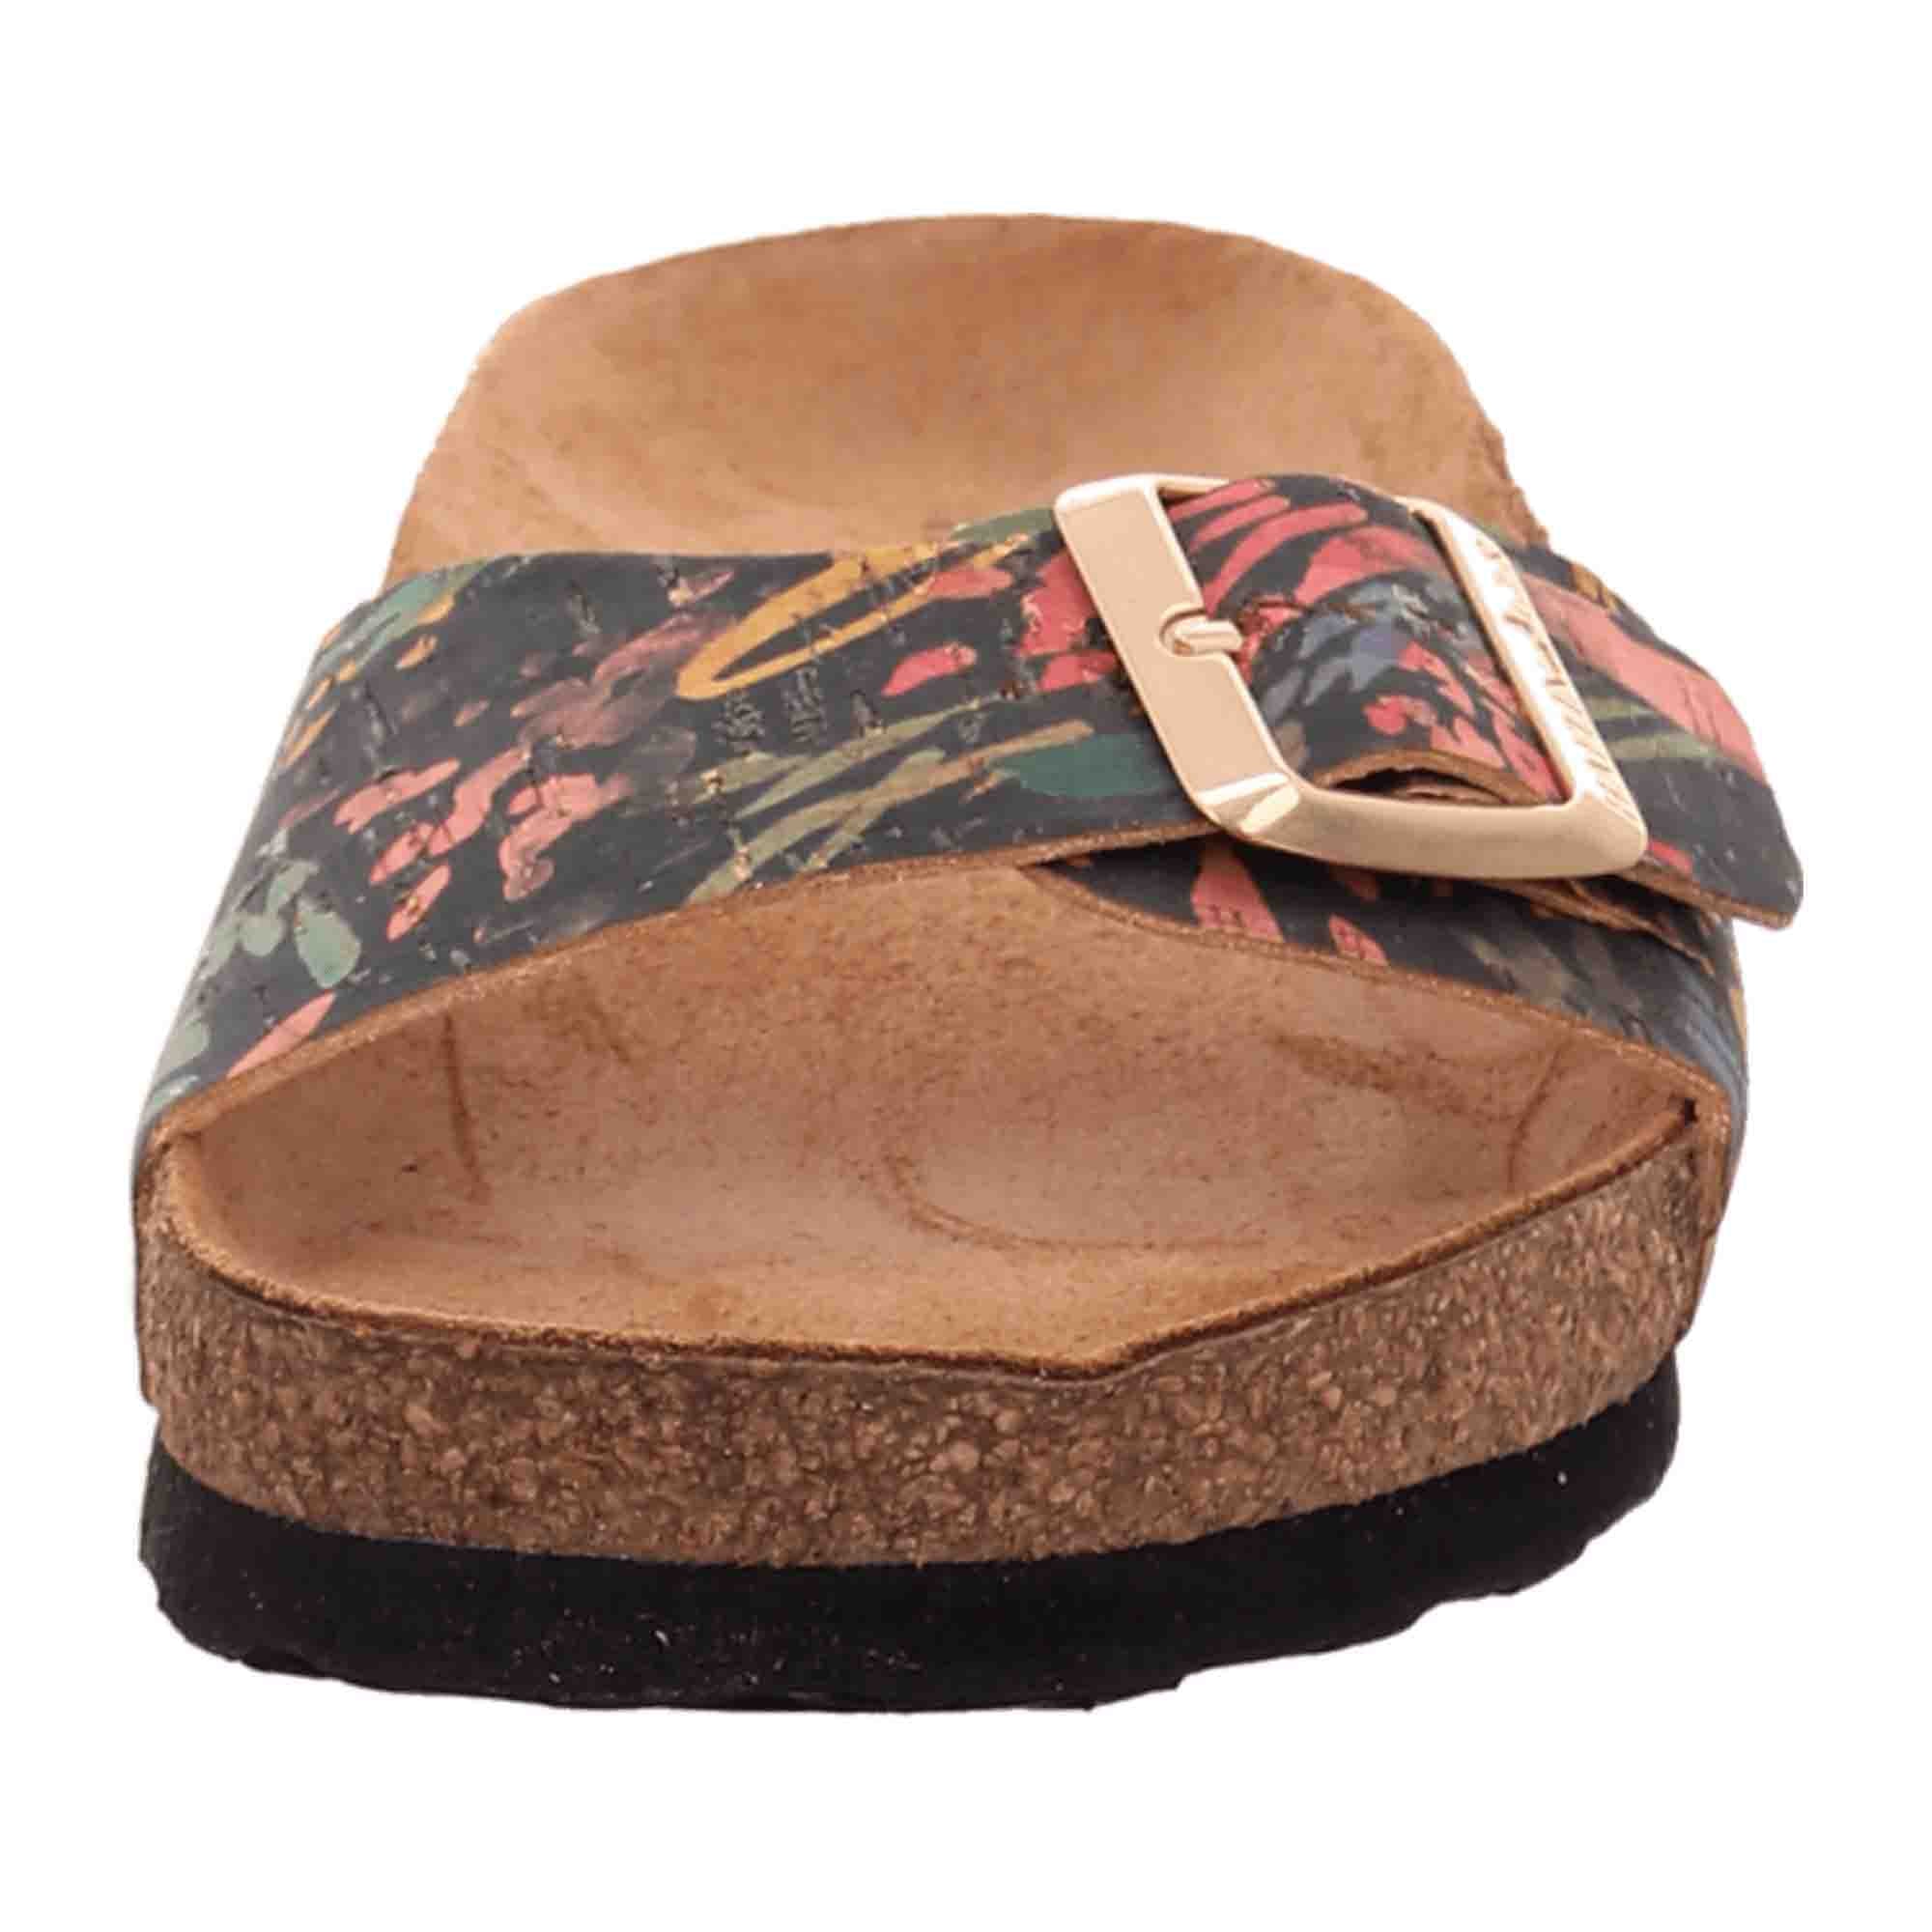 Haflinger Bio Gina Women's Sandals - Tropic Multicolor, Eco-friendly, Size EU 37